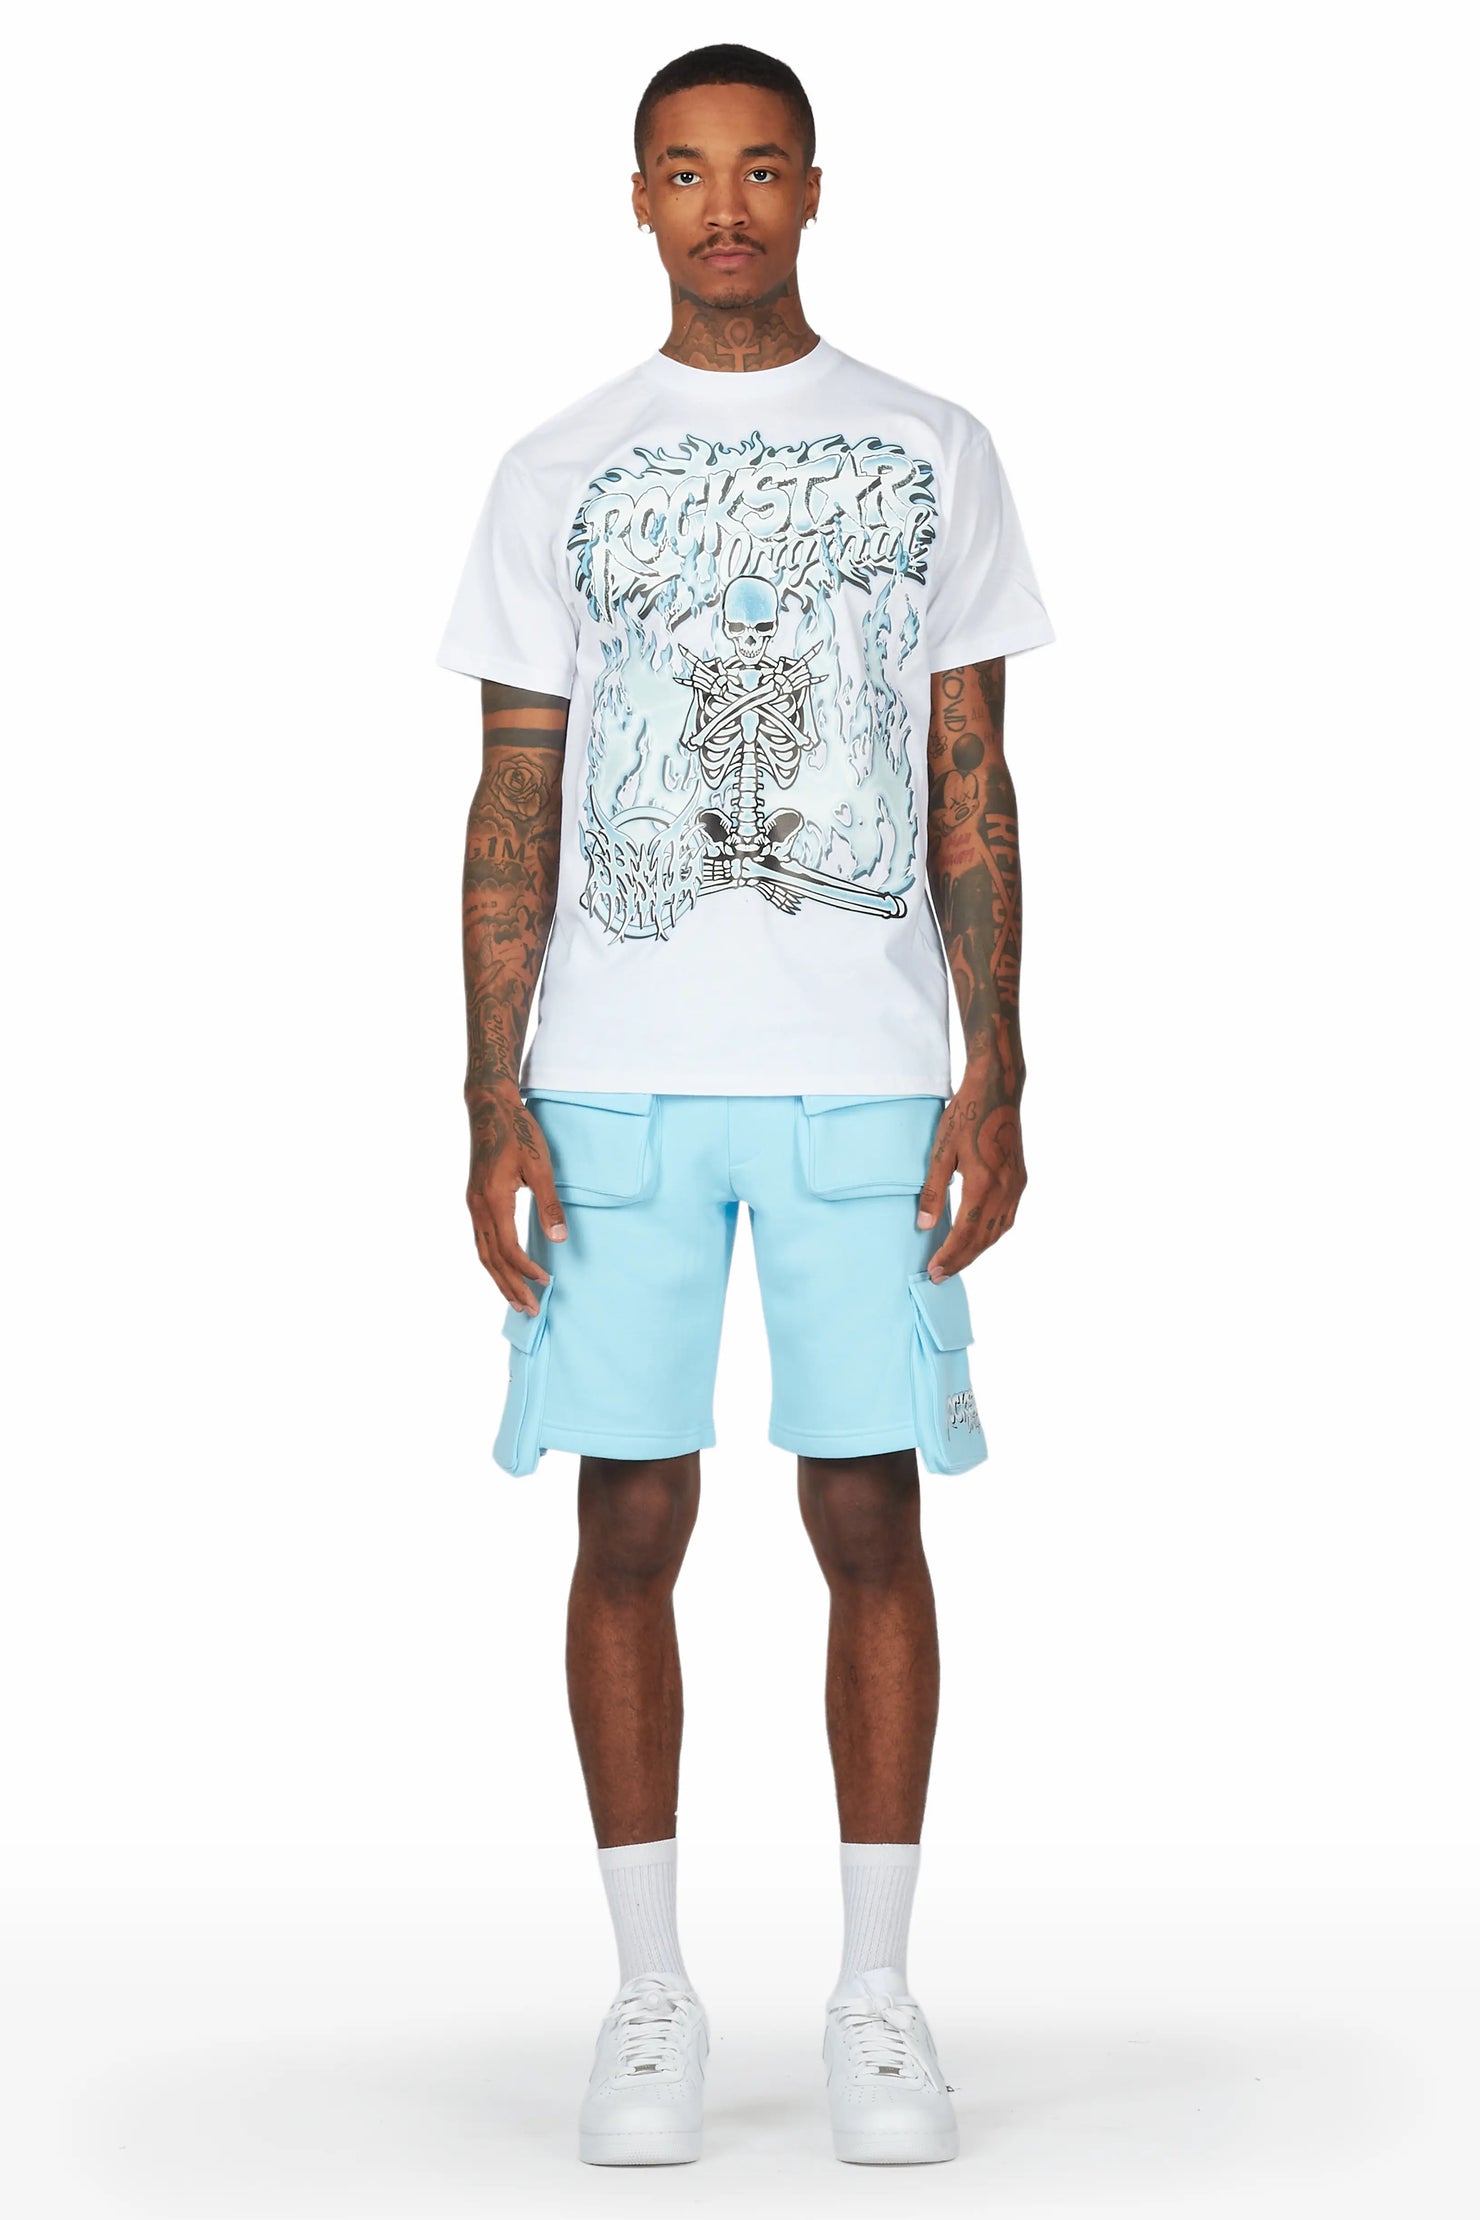 Yoga White/Blue T-Shirt Short Set